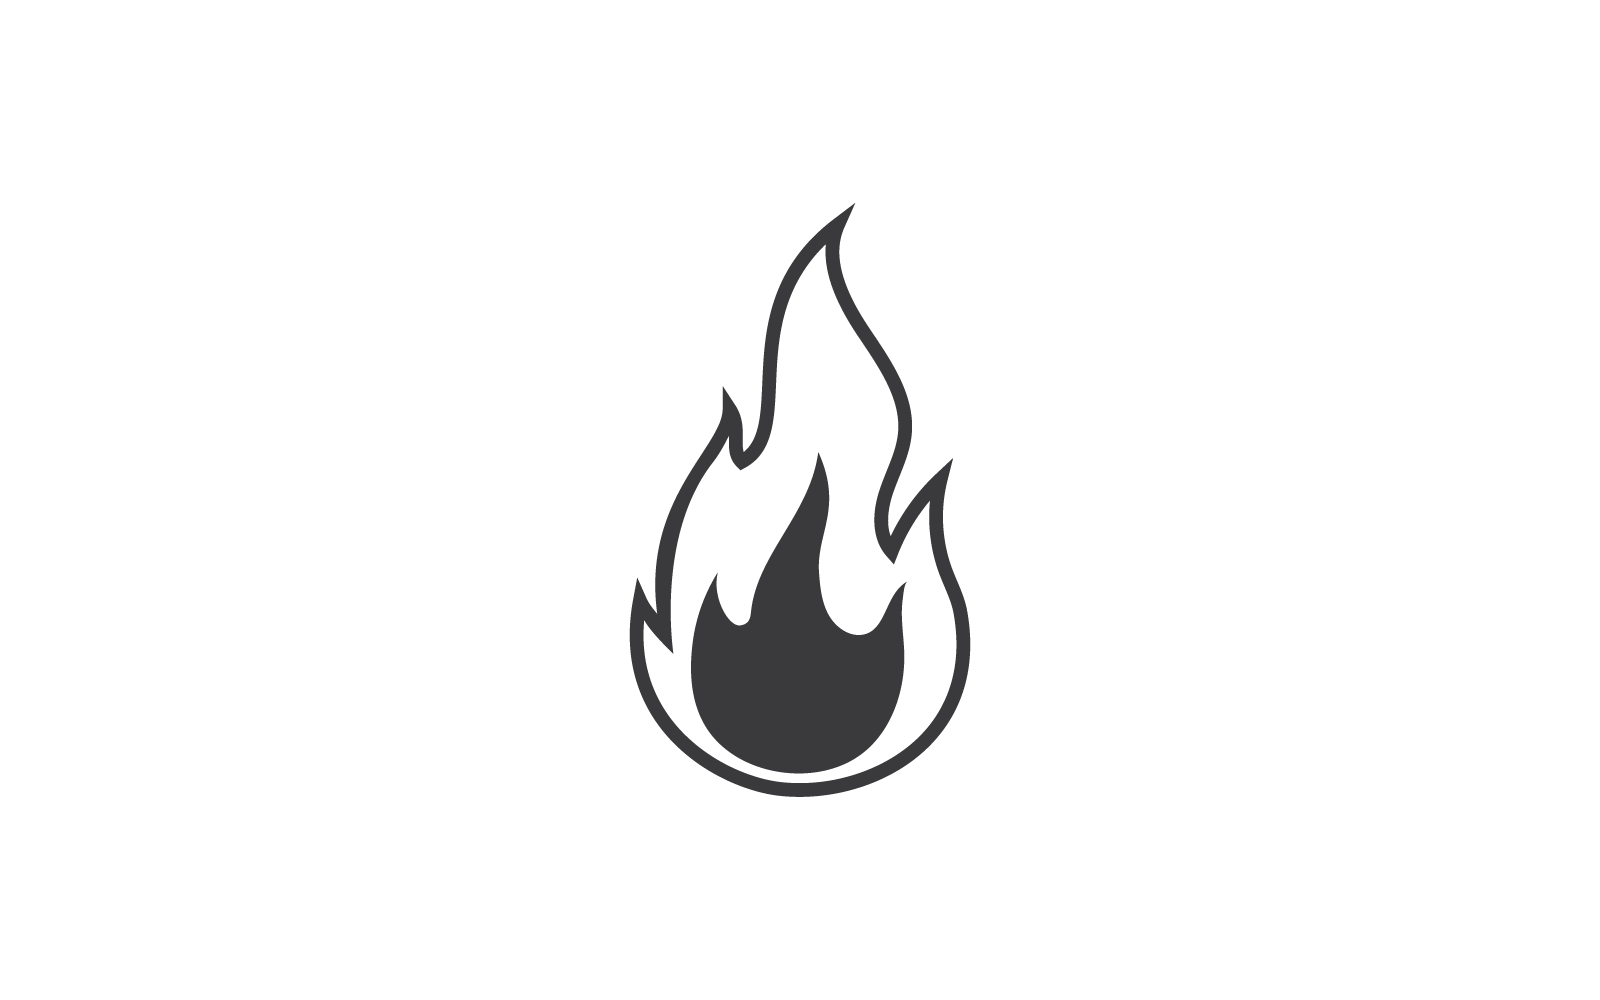 Fire flame Logo vector, Oil, gas and energy design vector